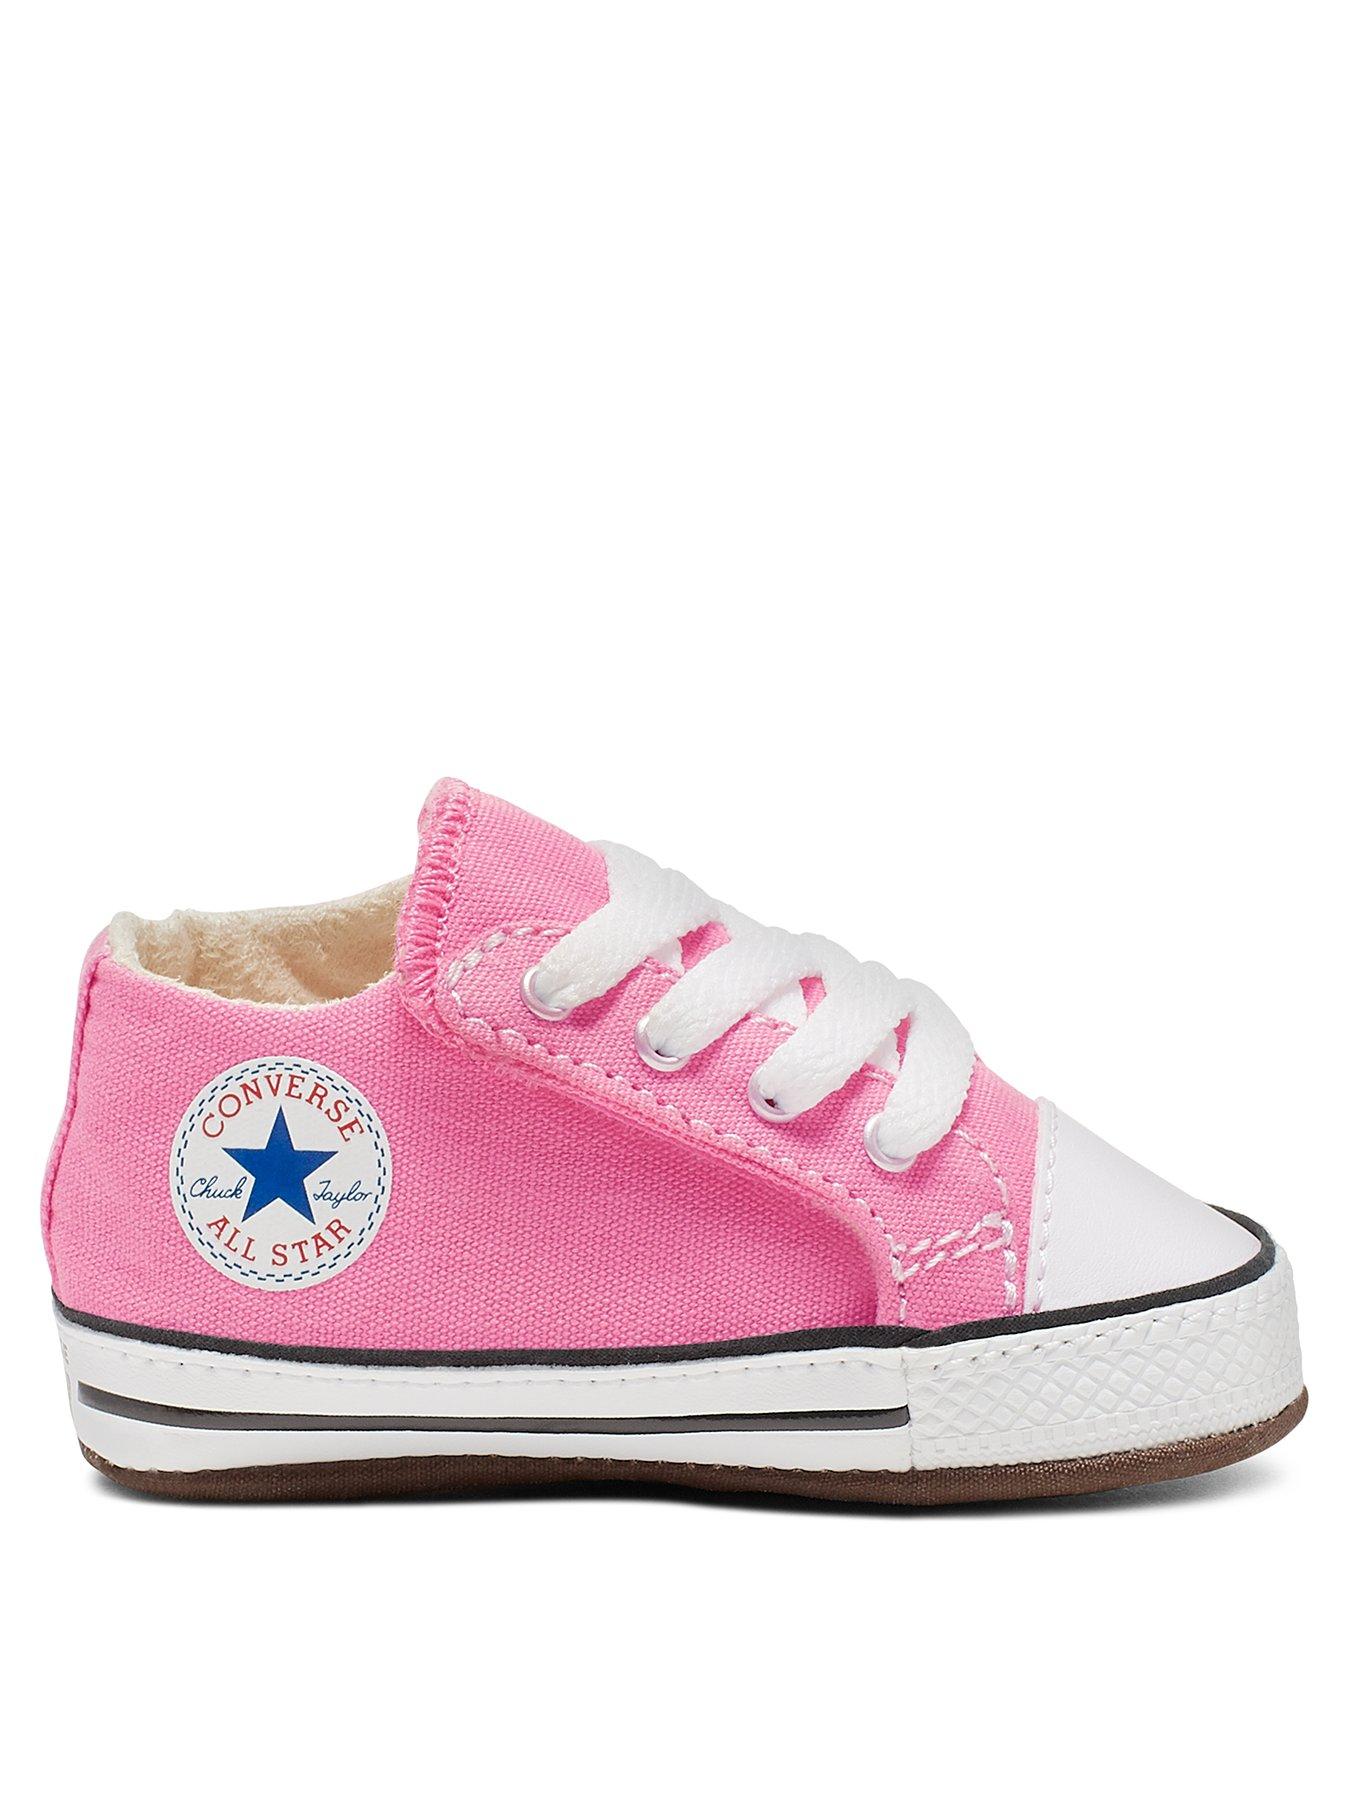 baby white converse pram shoes